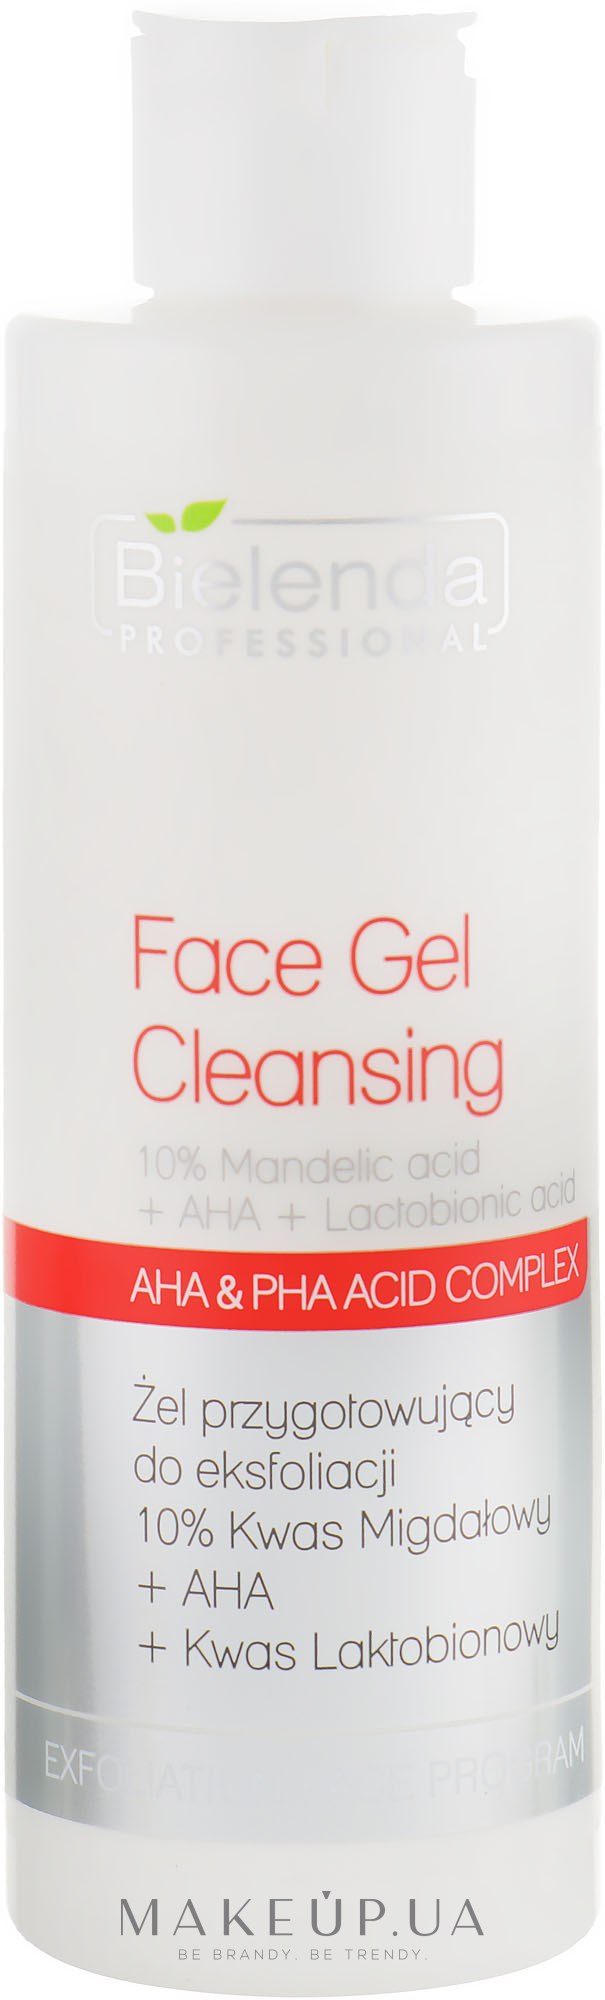 Гель для ексфоліації - Bielenda Professional Exfoliation Face Program Cleansing Face Gel — фото 200g